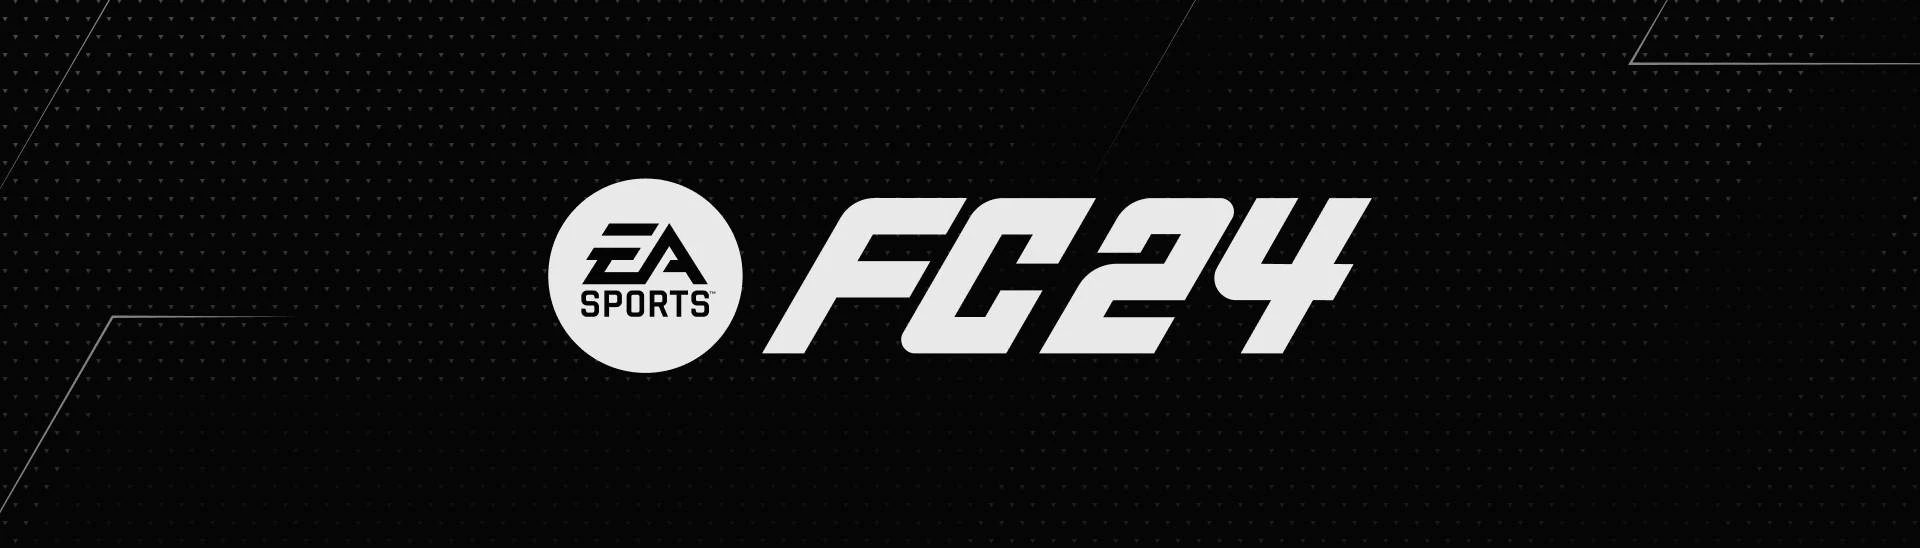 EA FC 24. EA FC 24 Steam. EA Sports FC. EA Sports FC 24 игра.